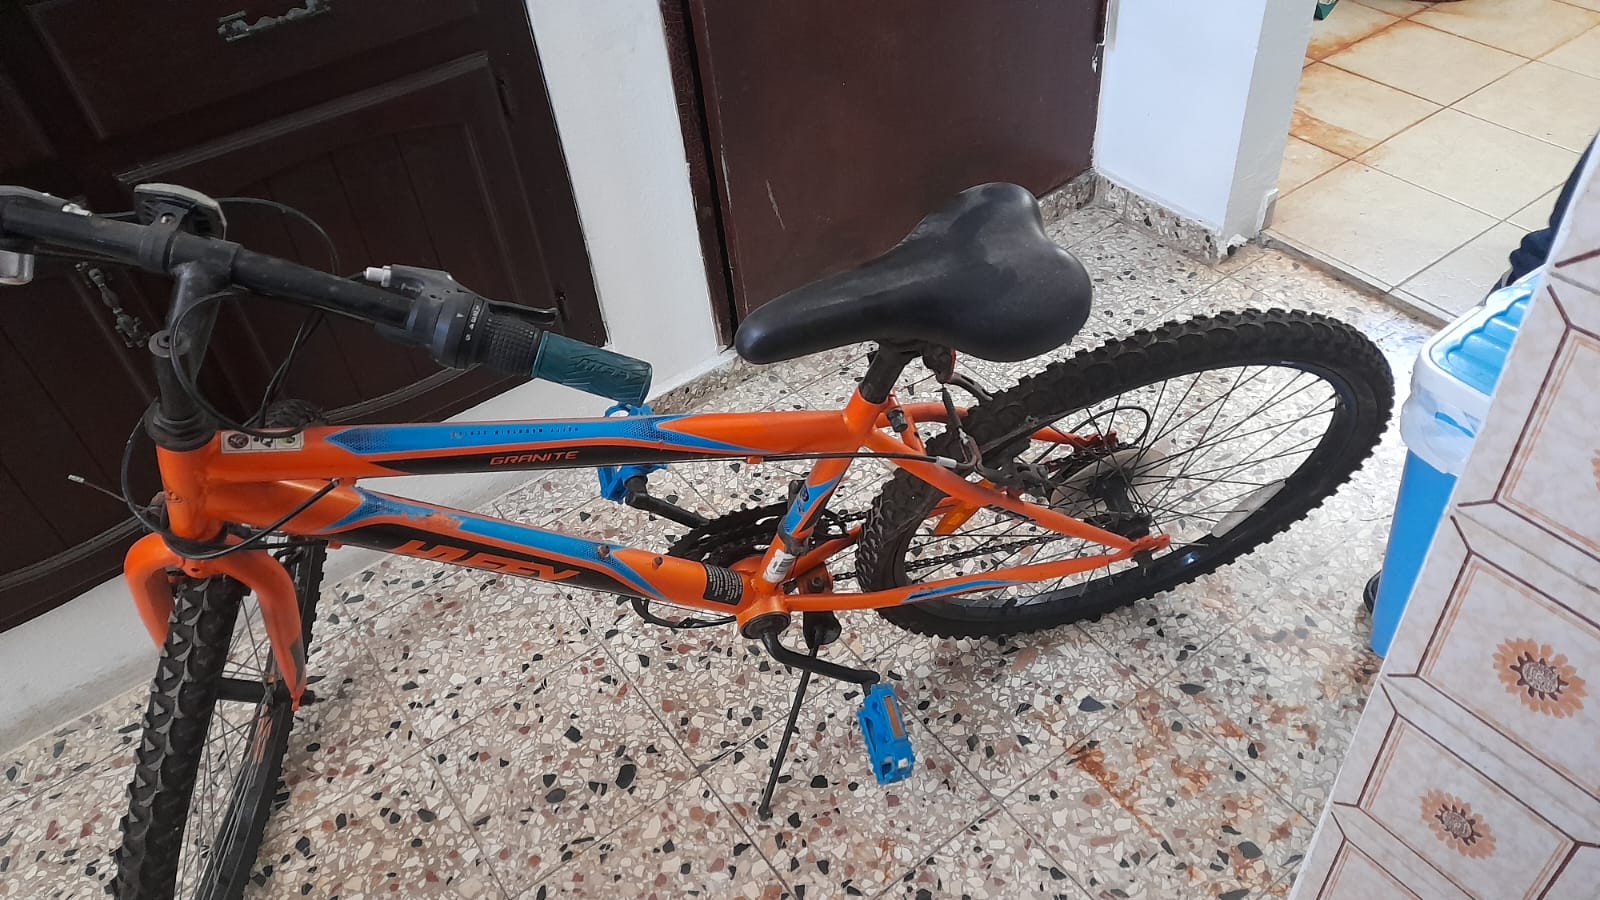 bicicletas y accesorios - BICICLETA ARO 24. RD$ 10,000 1